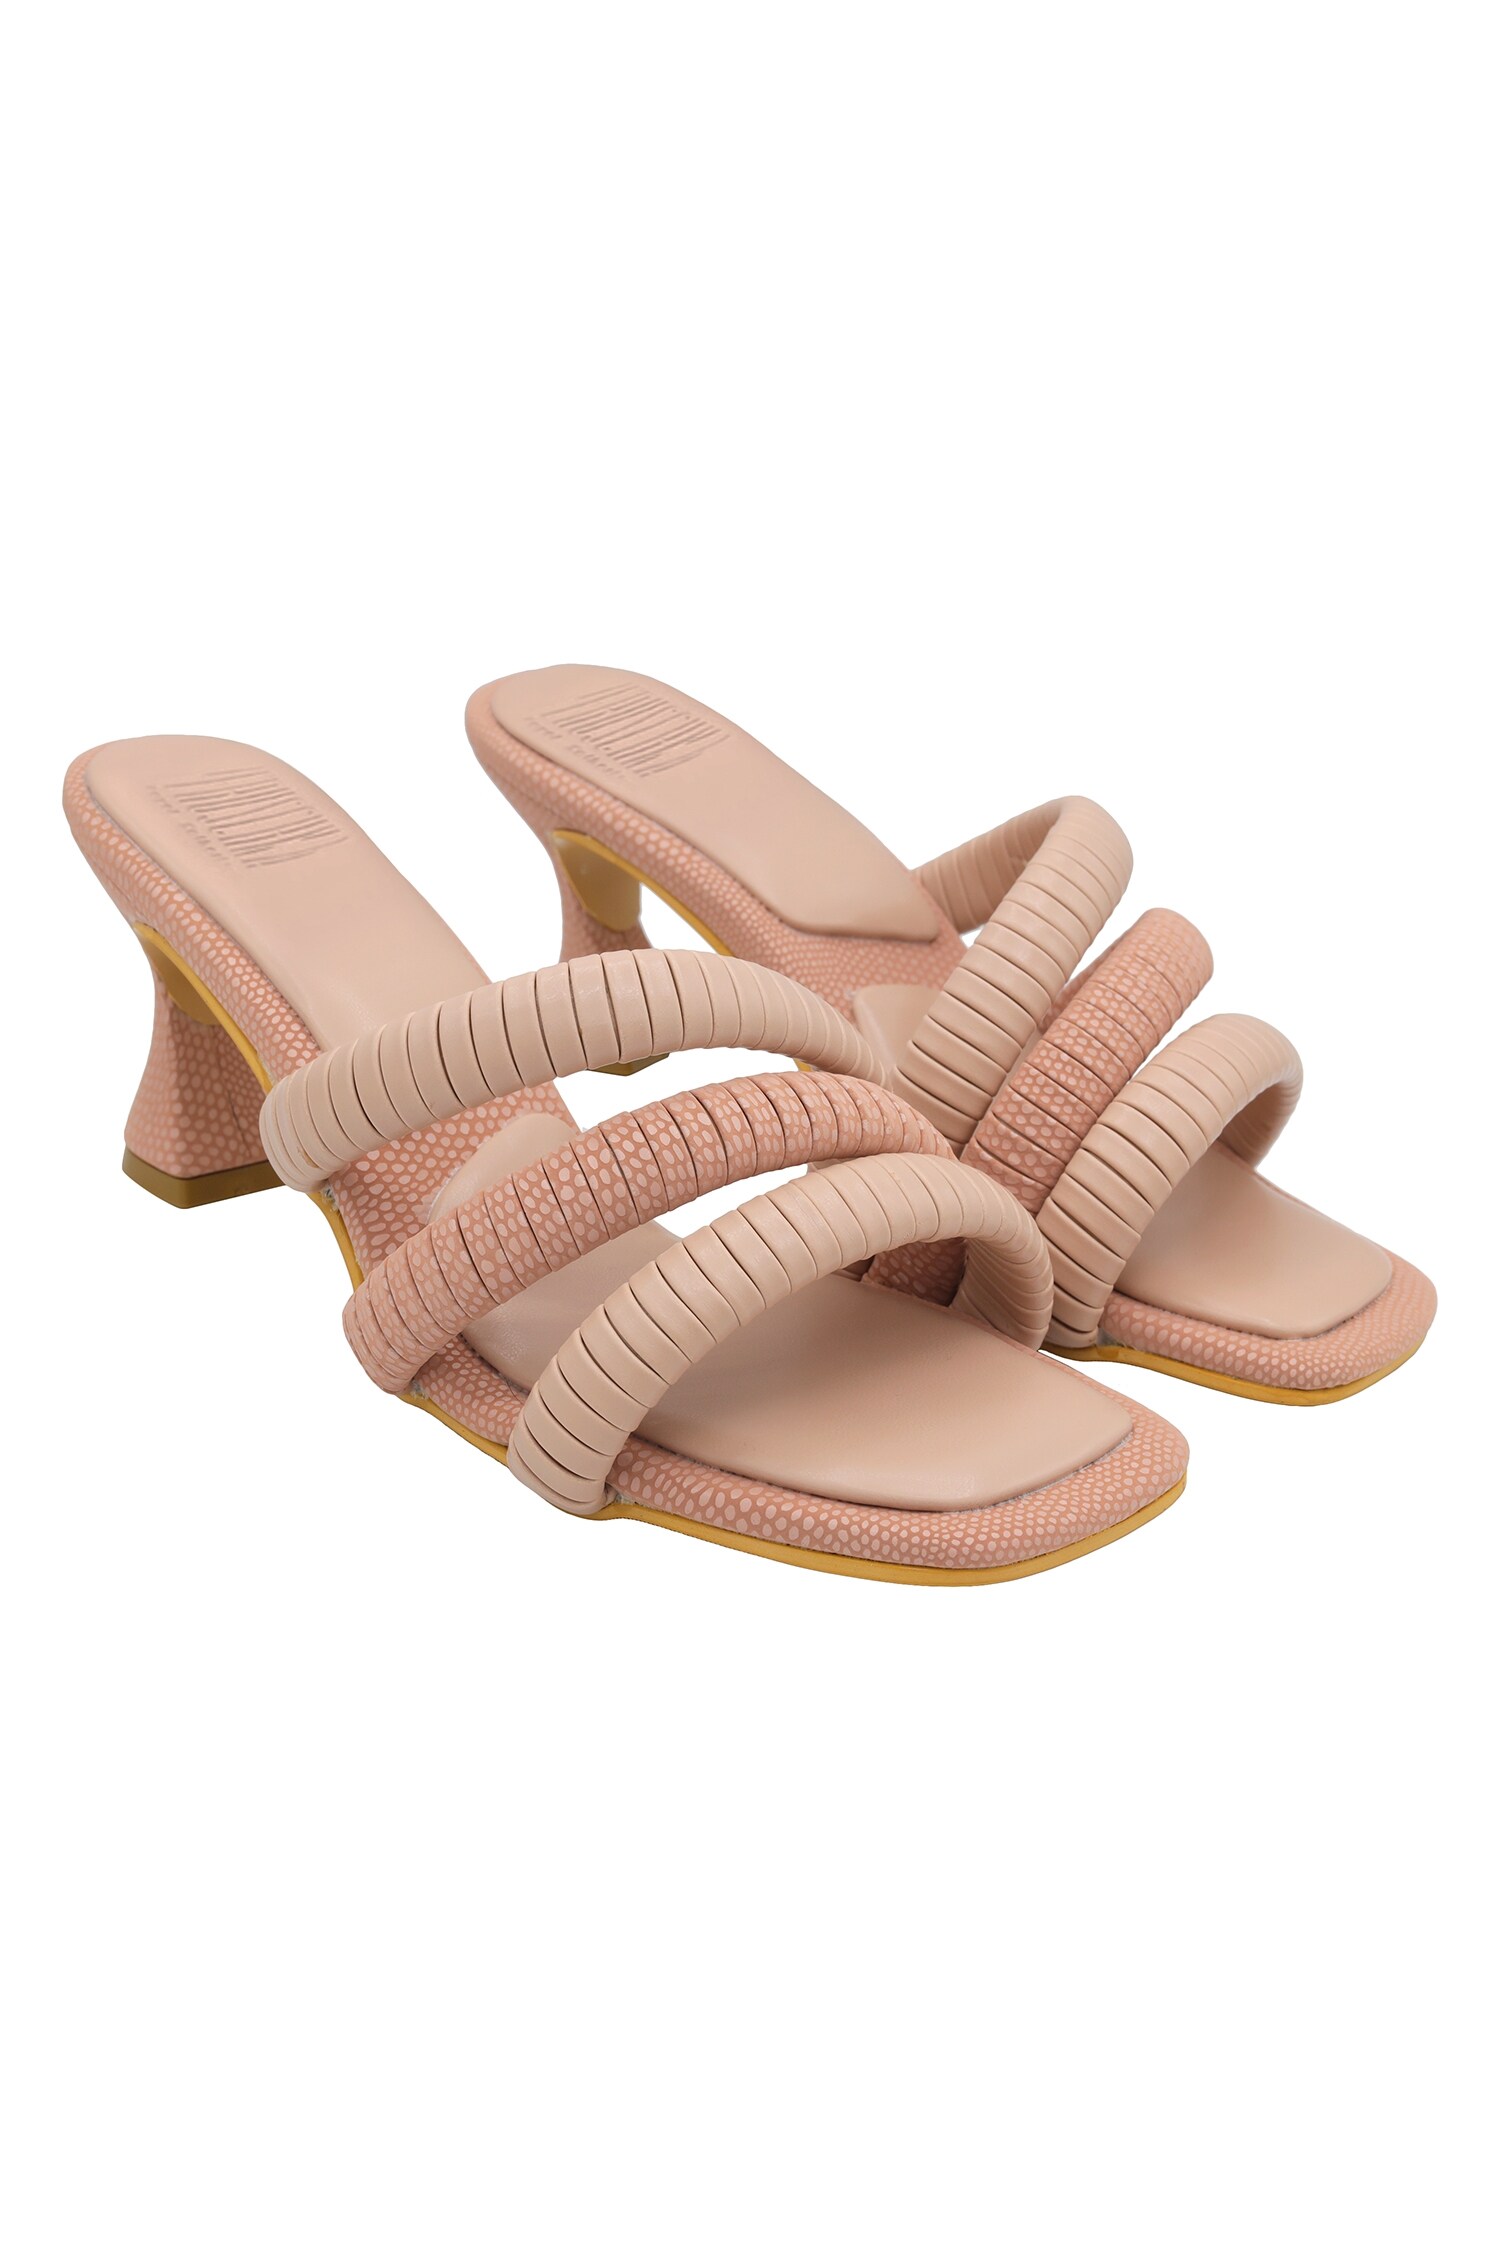 Veruschka by Payal Kothari Pink Faux Leather Strappy Louis Heels